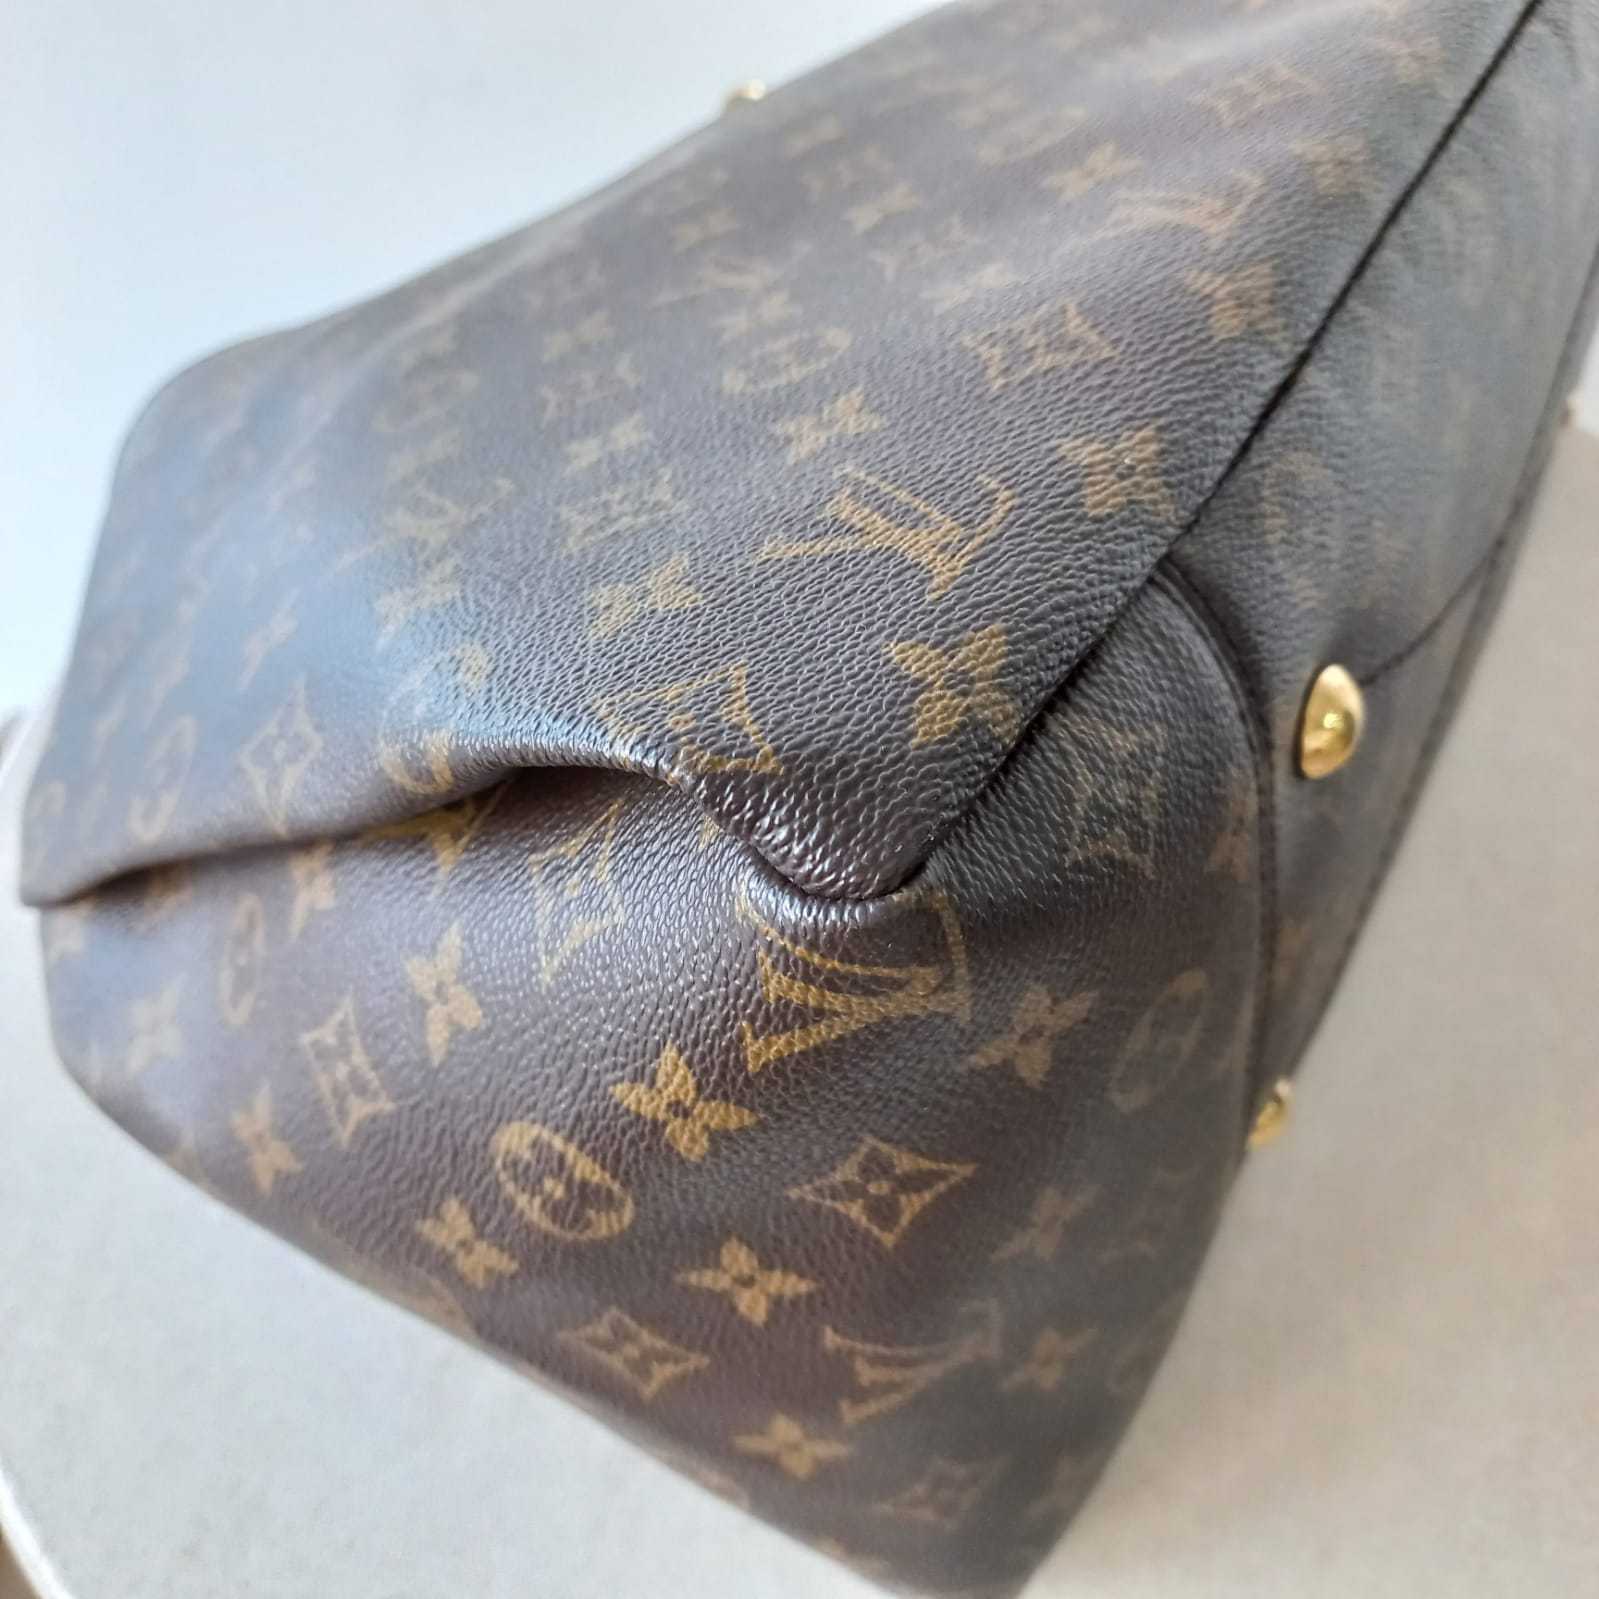 Louis Vuitton Monogram Artsy MM Bag MLI22076